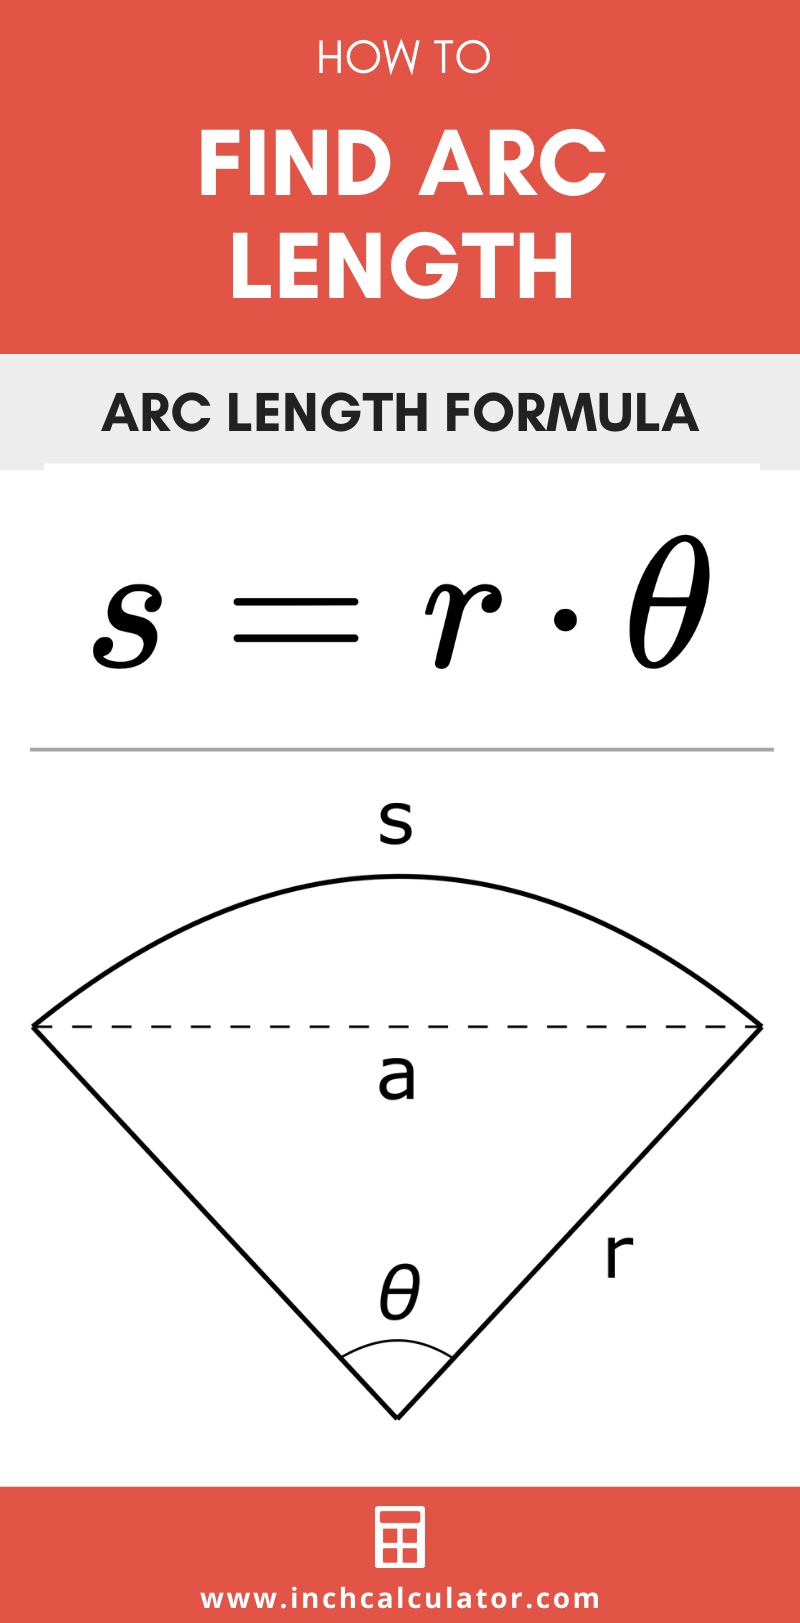 Share arc length calculator